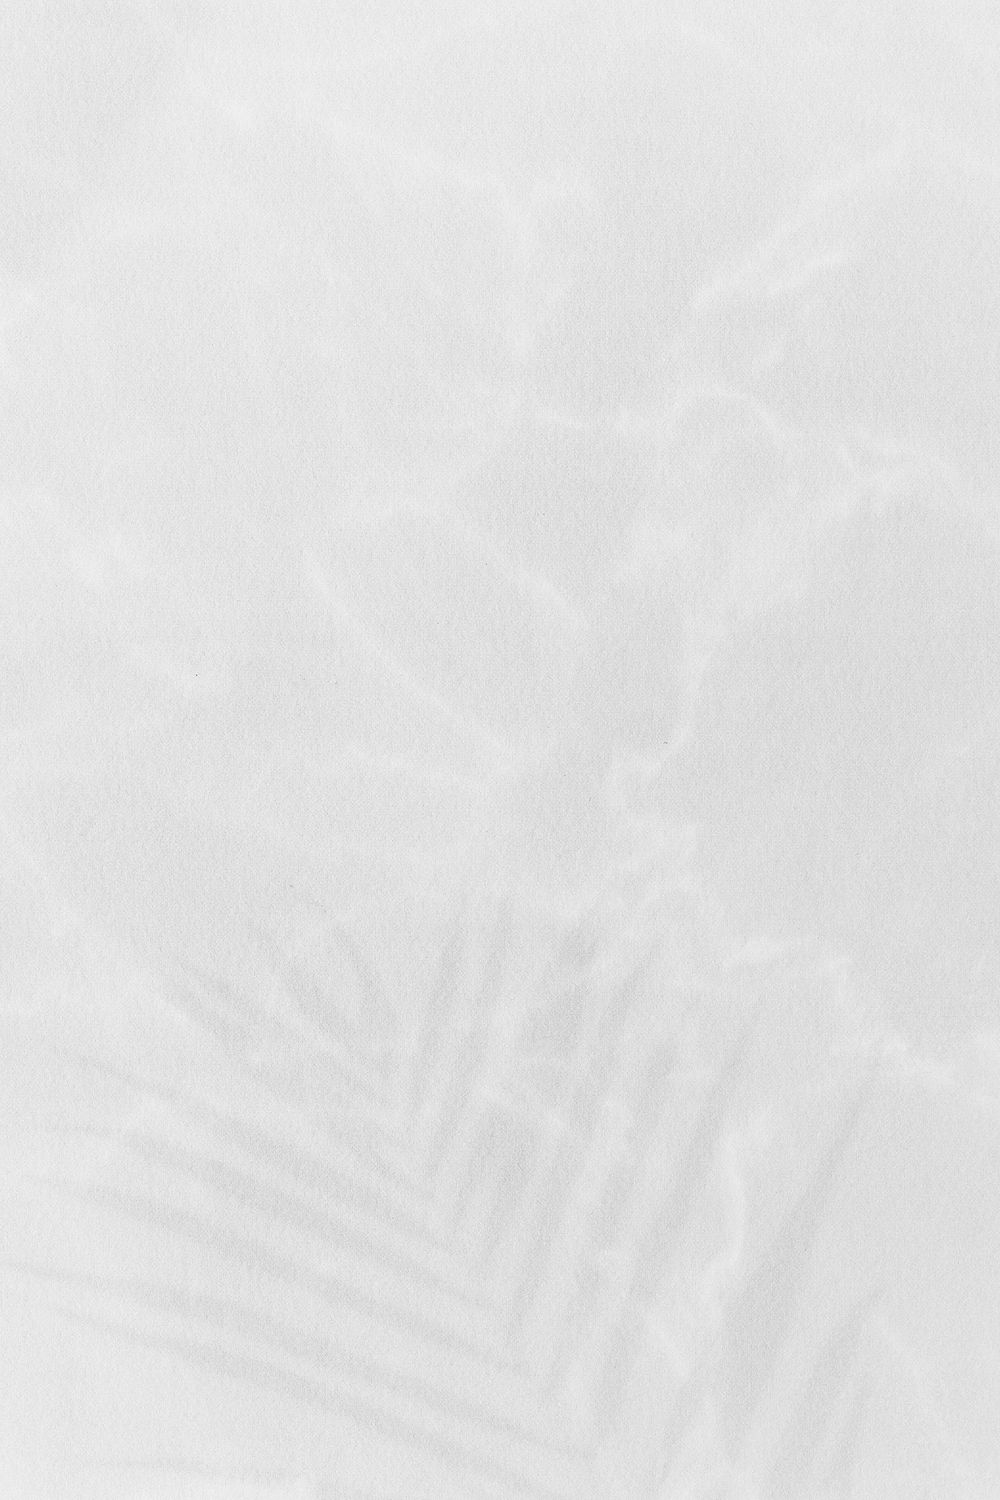 Gray palm leaf shadow background | Premium Photo - rawpixel